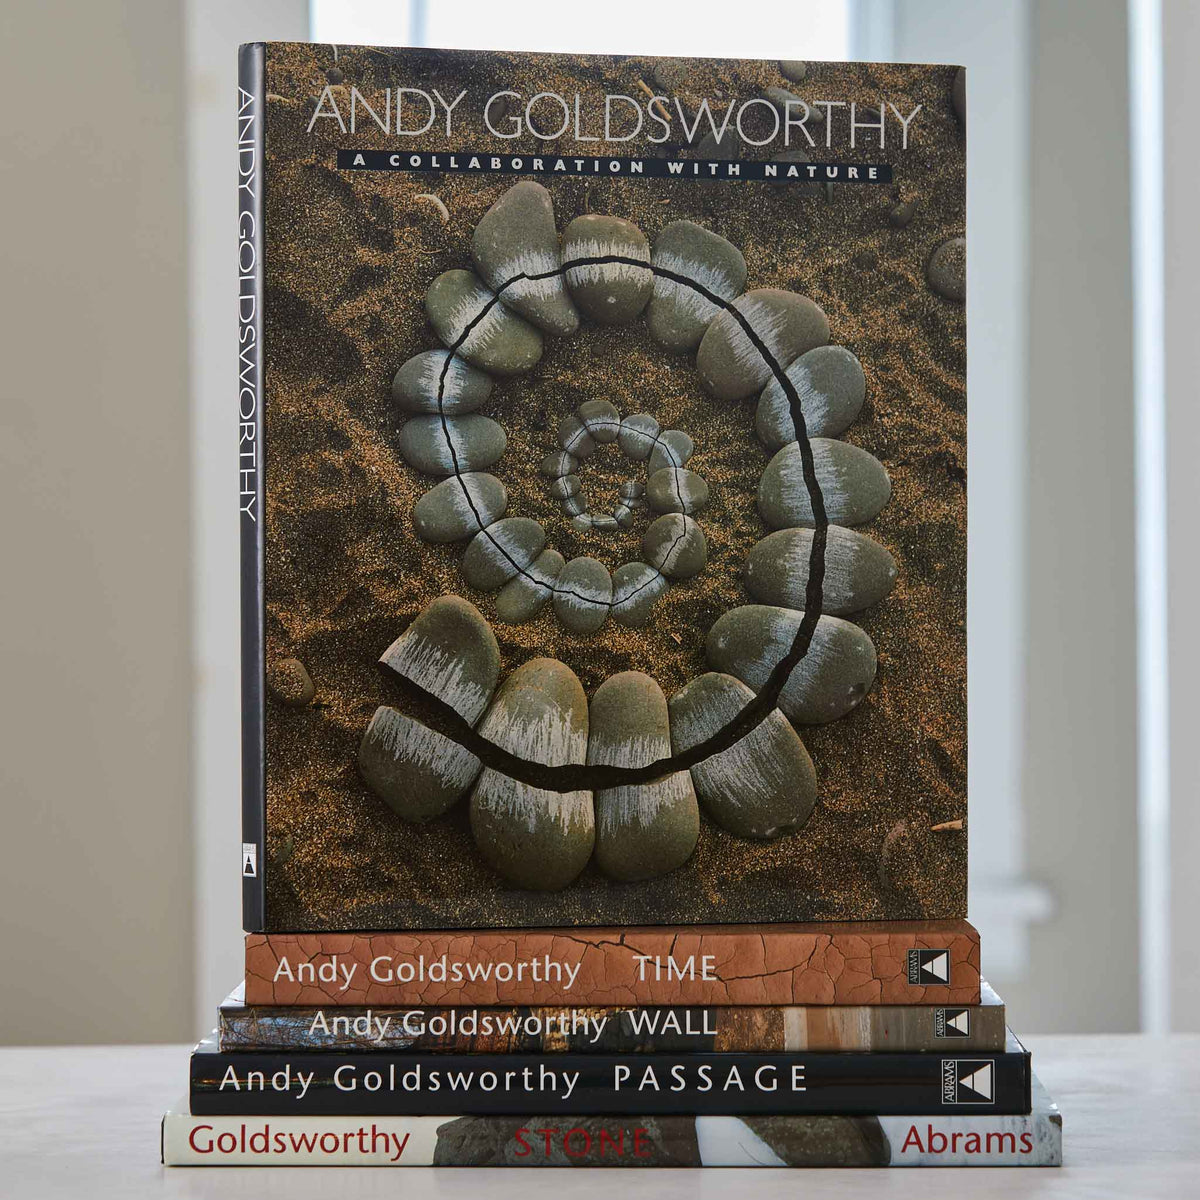 PASSAGE, ANDY GOLDSWORTHY